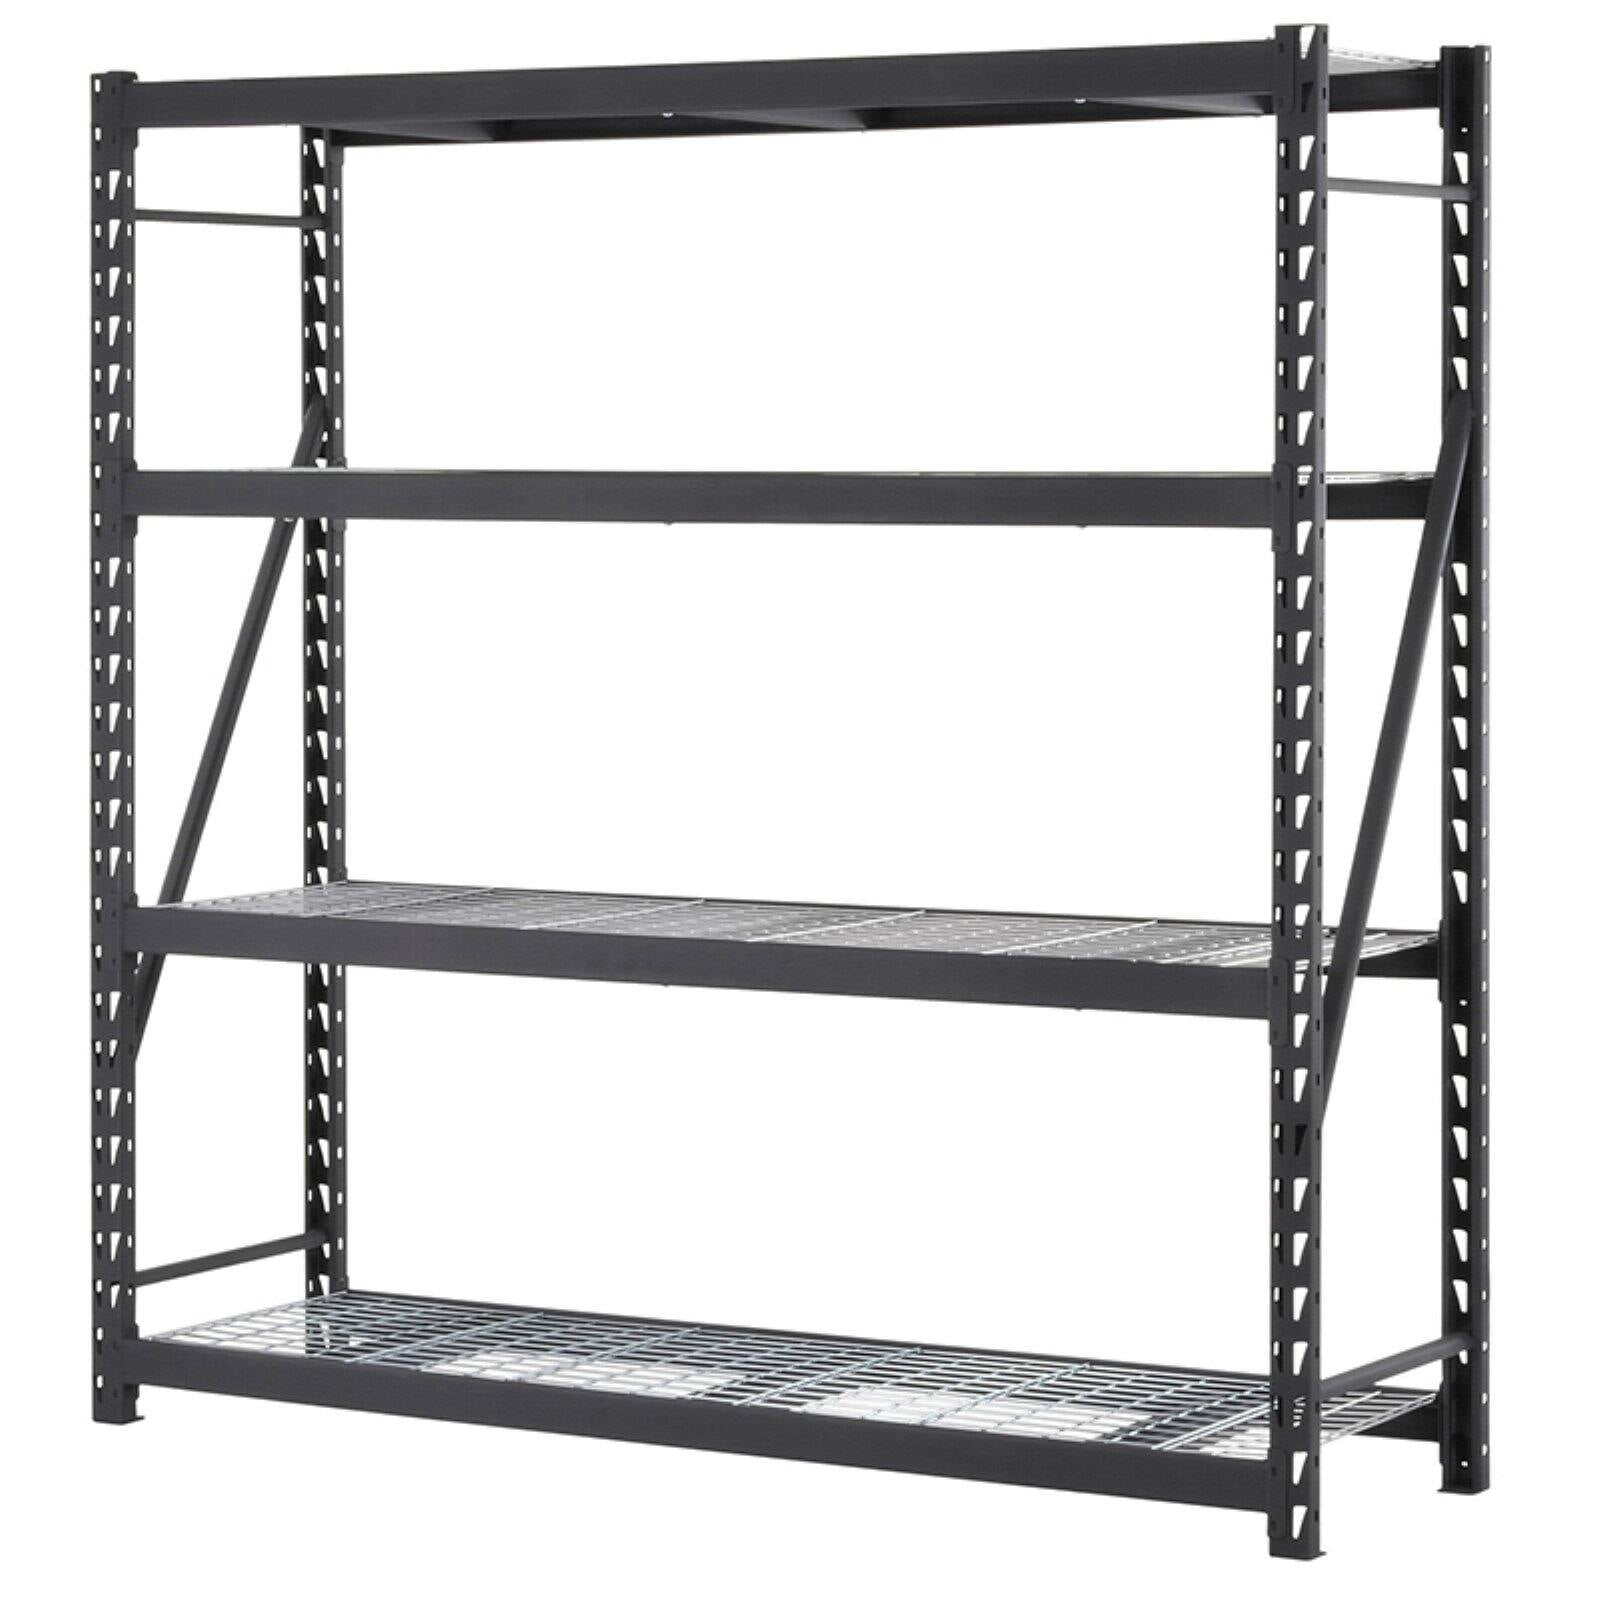 Gladiator Shelf Rack 4 Shelves, Gladiator Shelving Unit